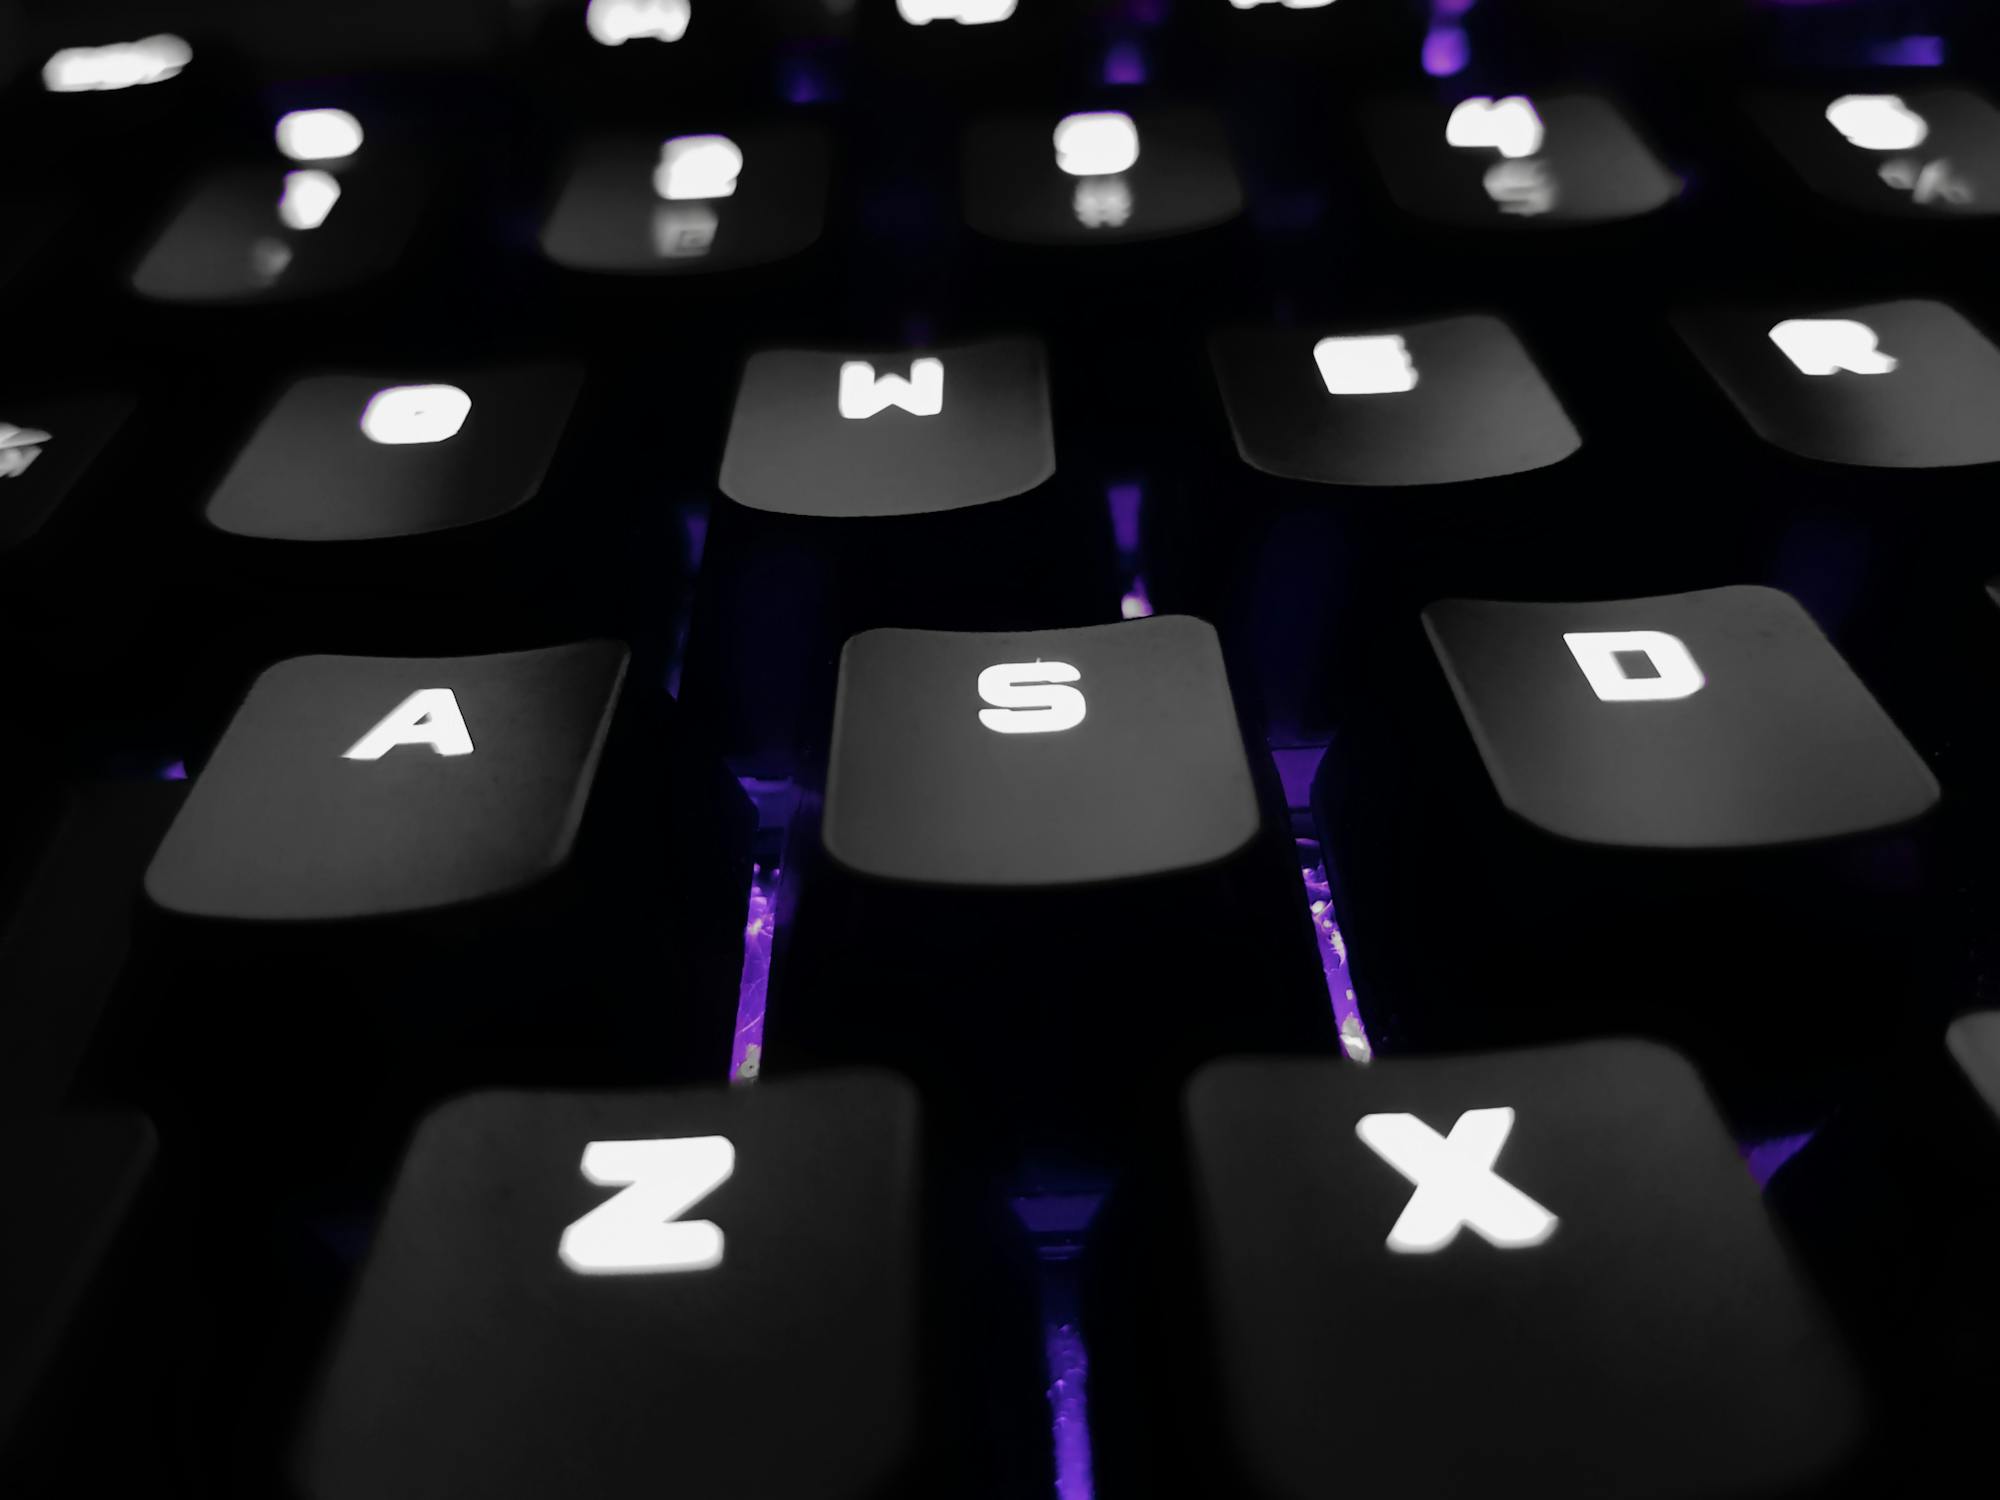 Mechanical keyboard with backlit keycaps